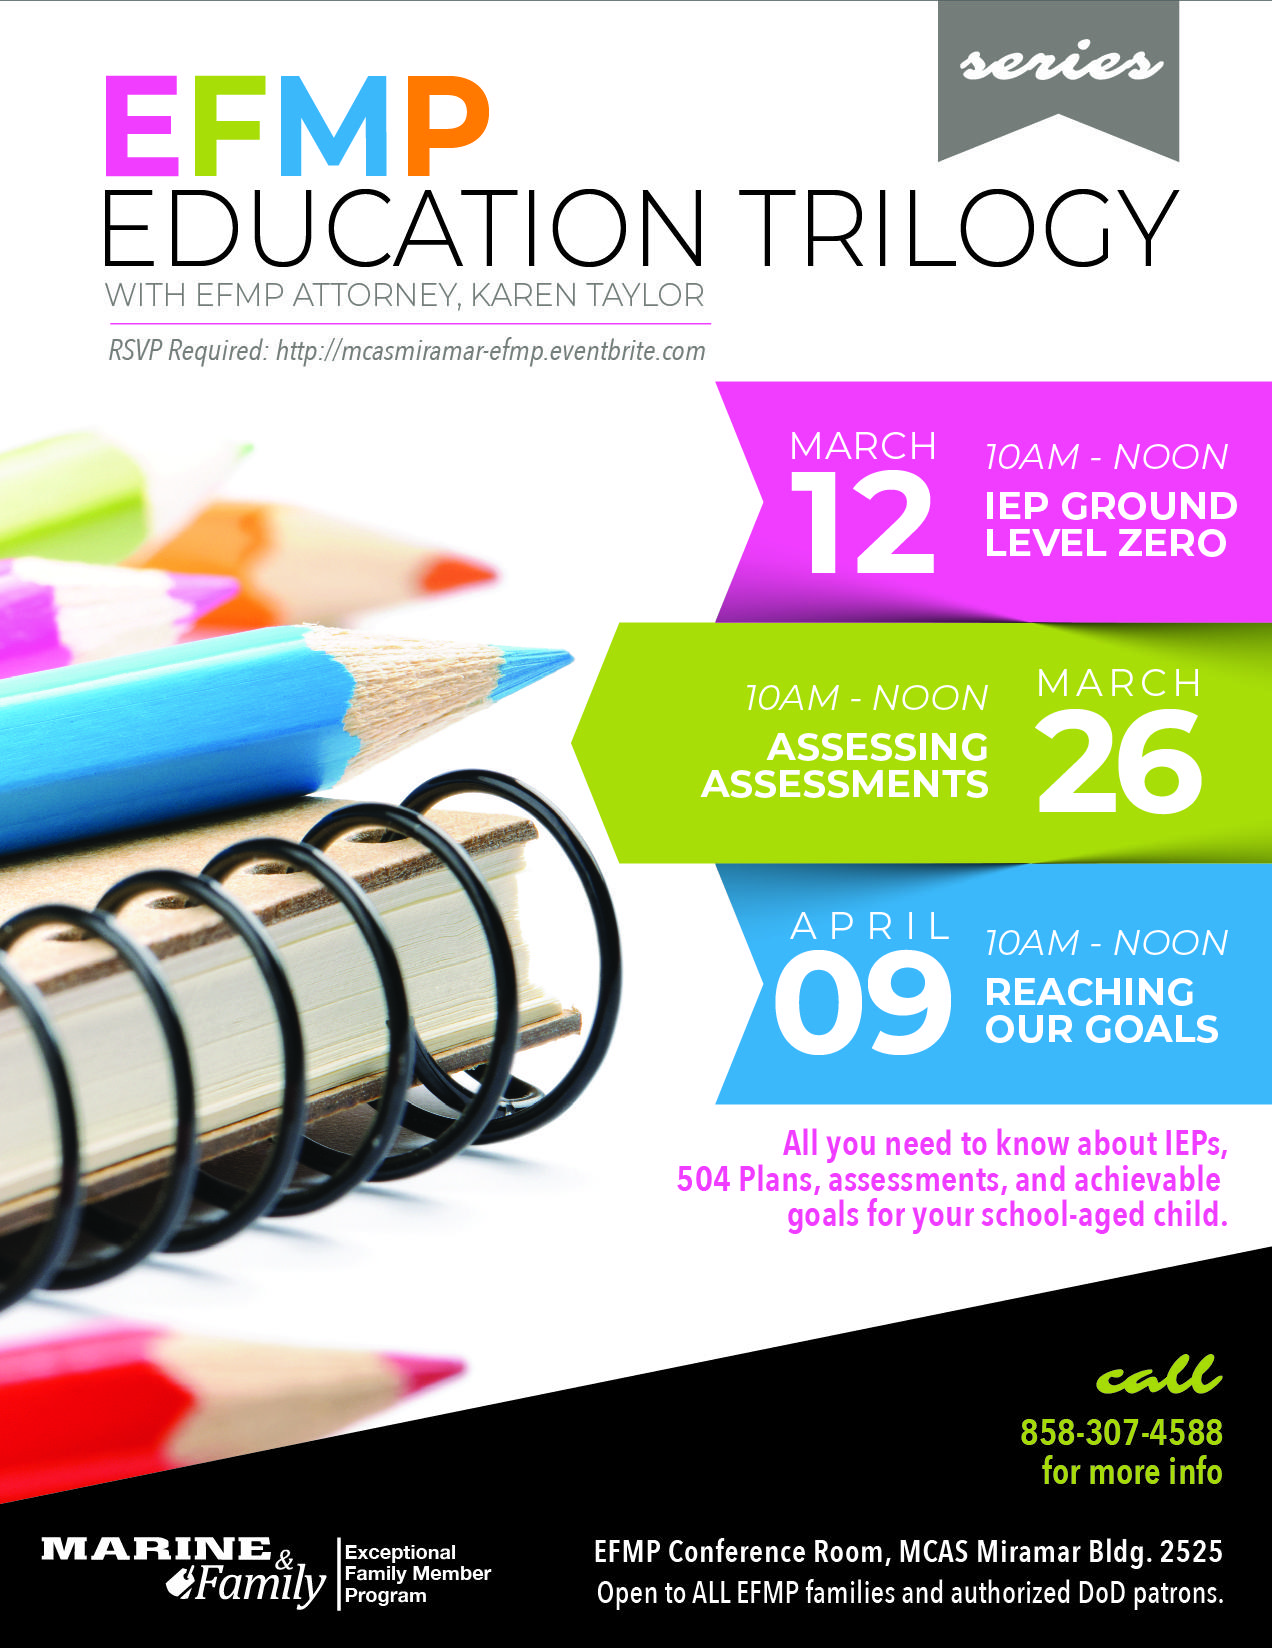 EFMP Special Education & IEP Trilogy